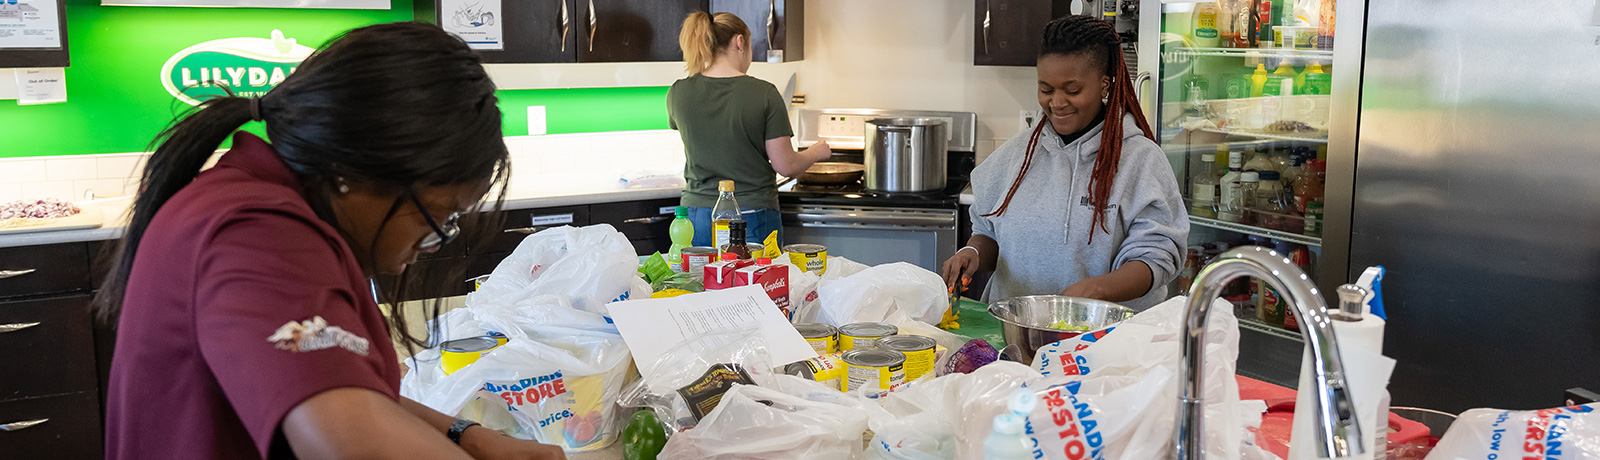 students volunteering in kitchen